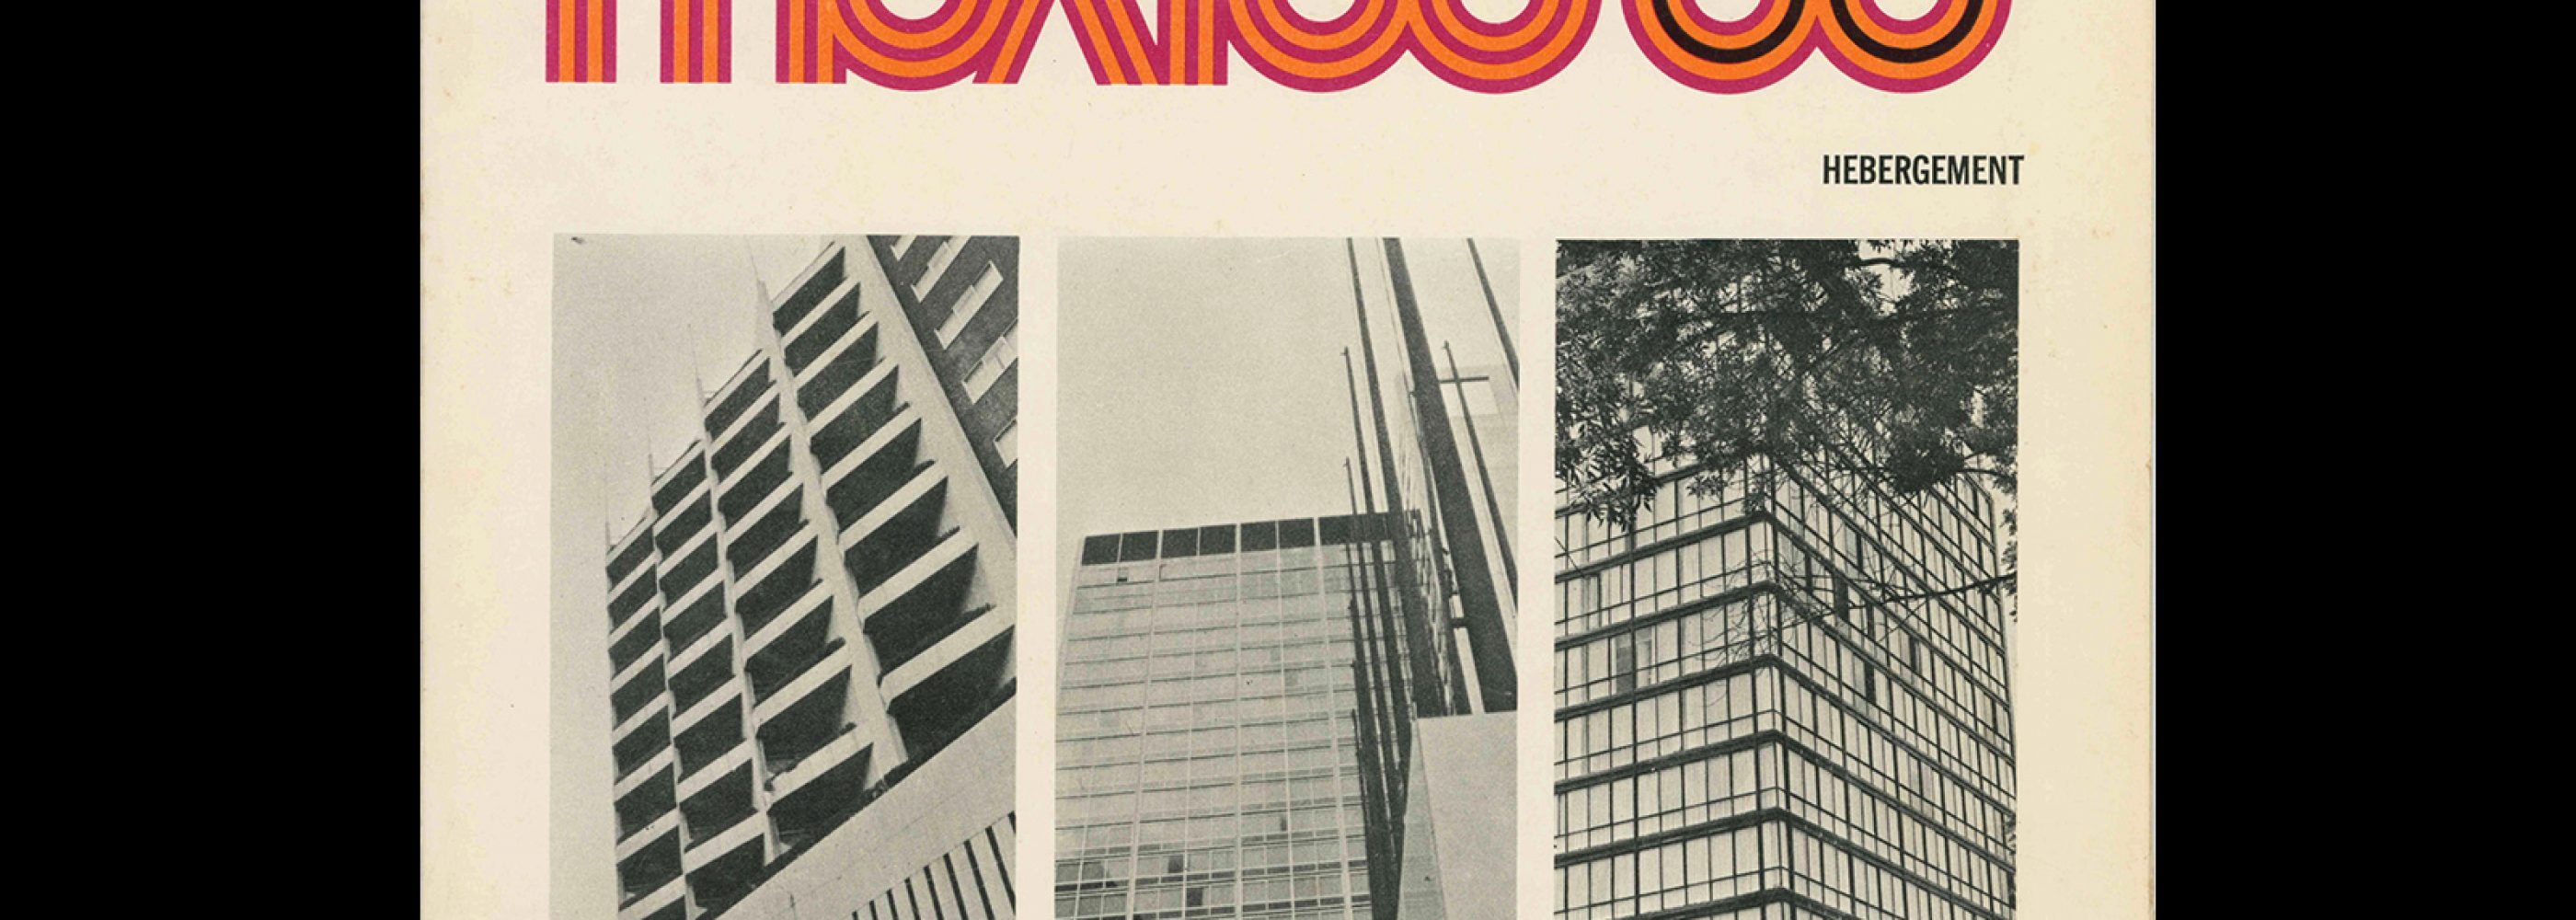 Mexico 1968, Communique Olympique 7, 1968. Designed by Lance Wyman